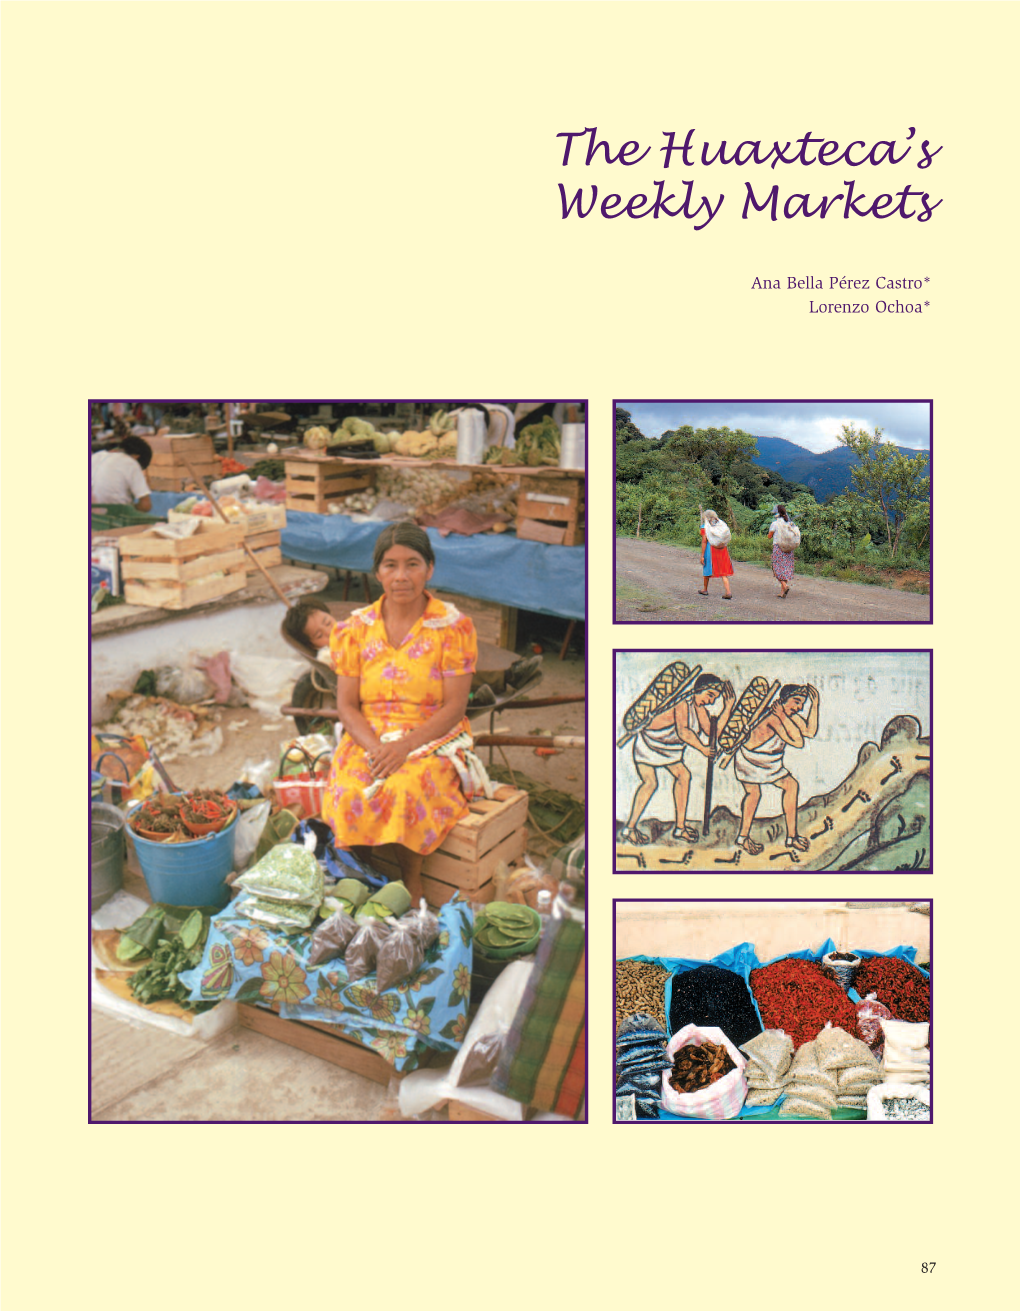 The Huaxteca's Weekly Markets